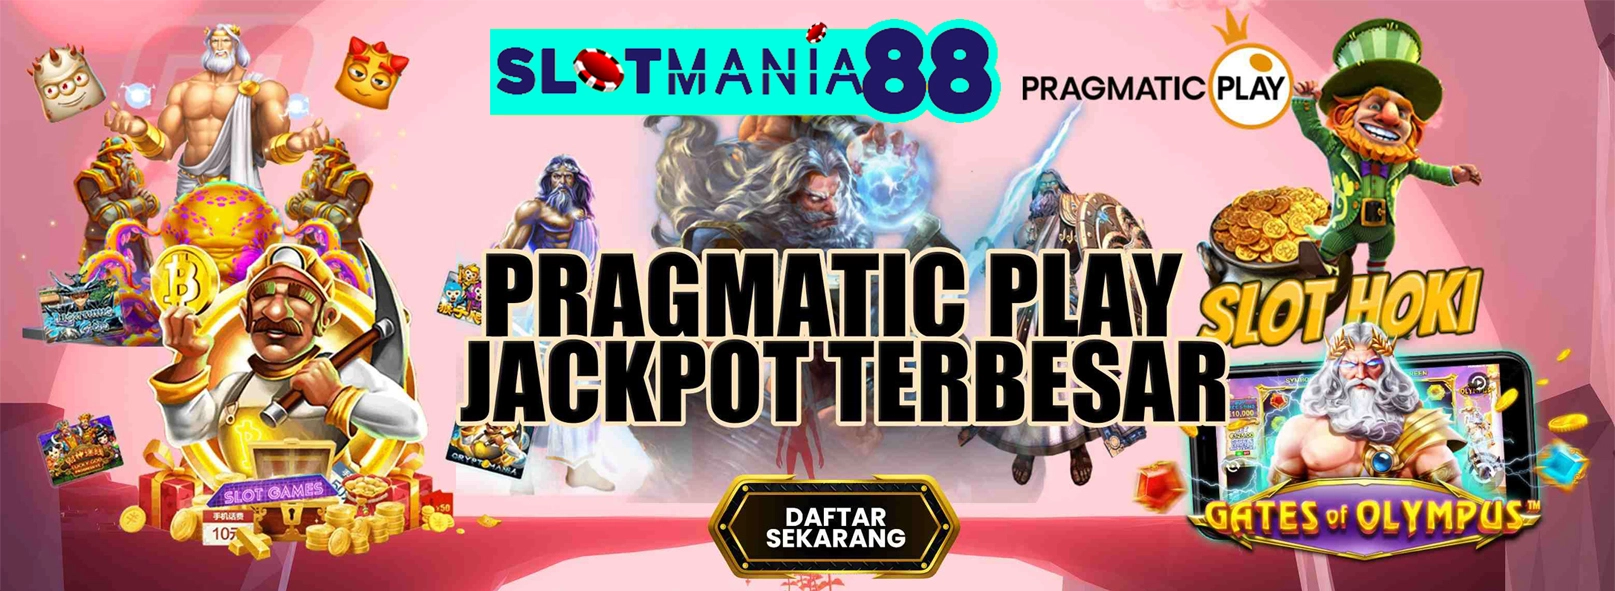 slotmania88 pragmatic play jackpot